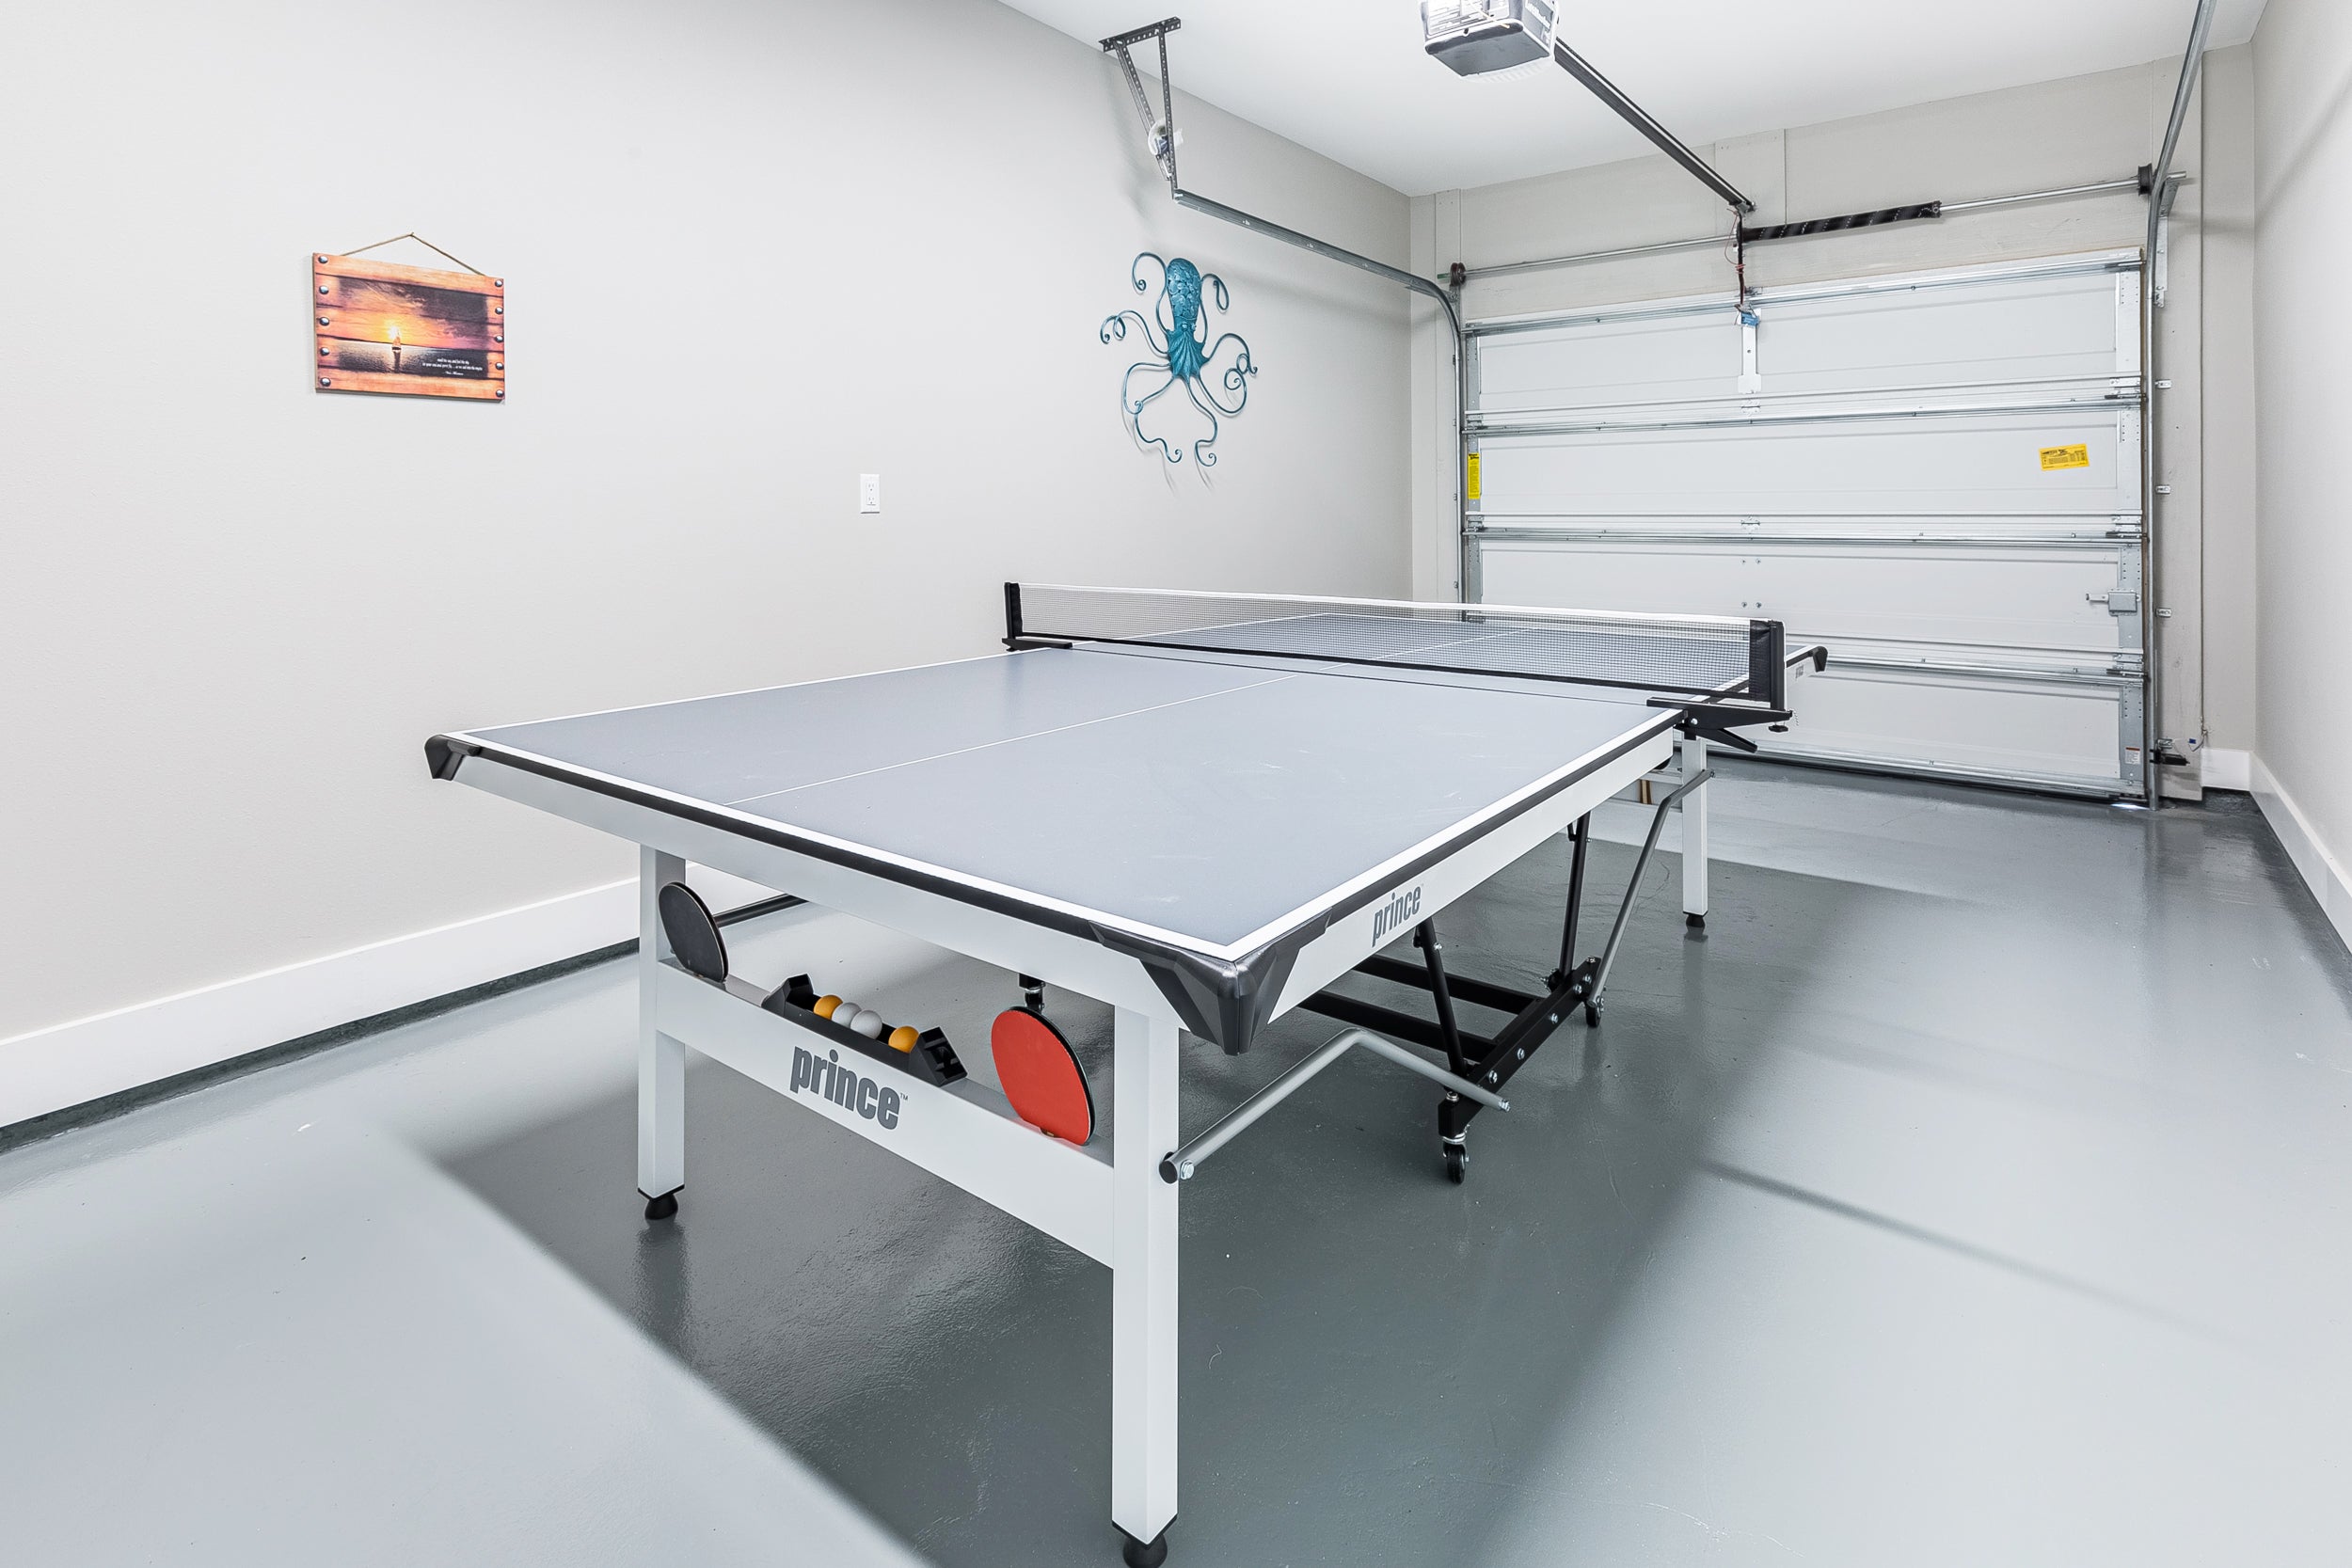 Garage has ping pong table!